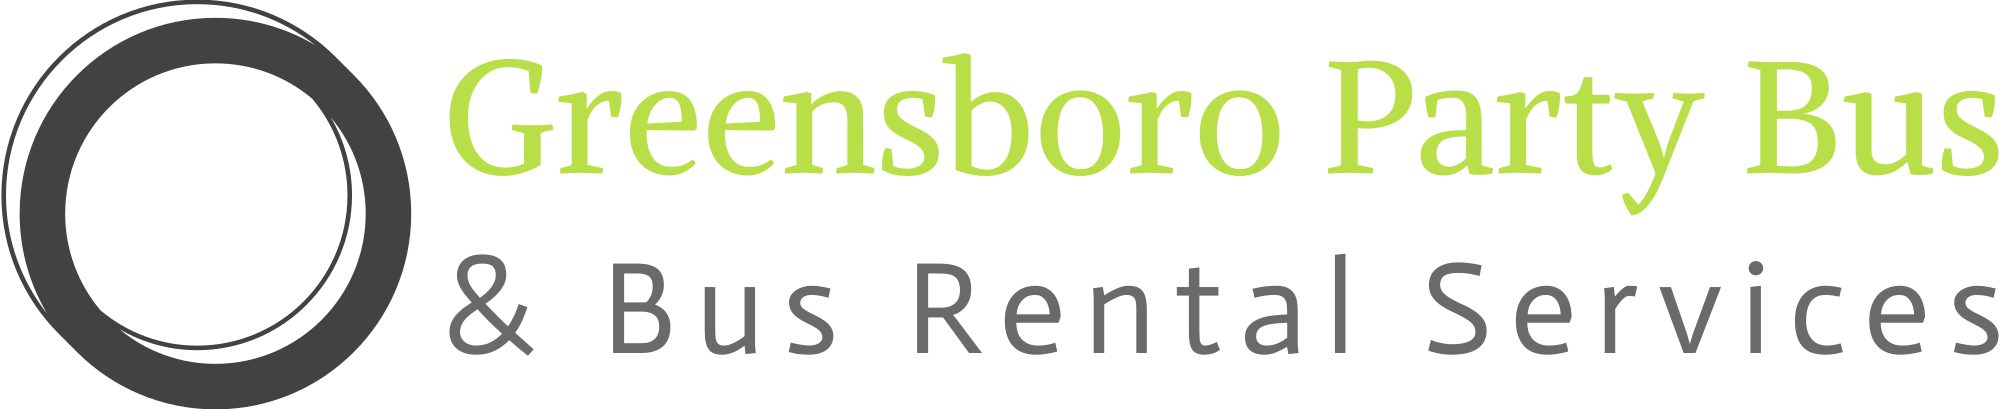 Party Bus Greensboro logo